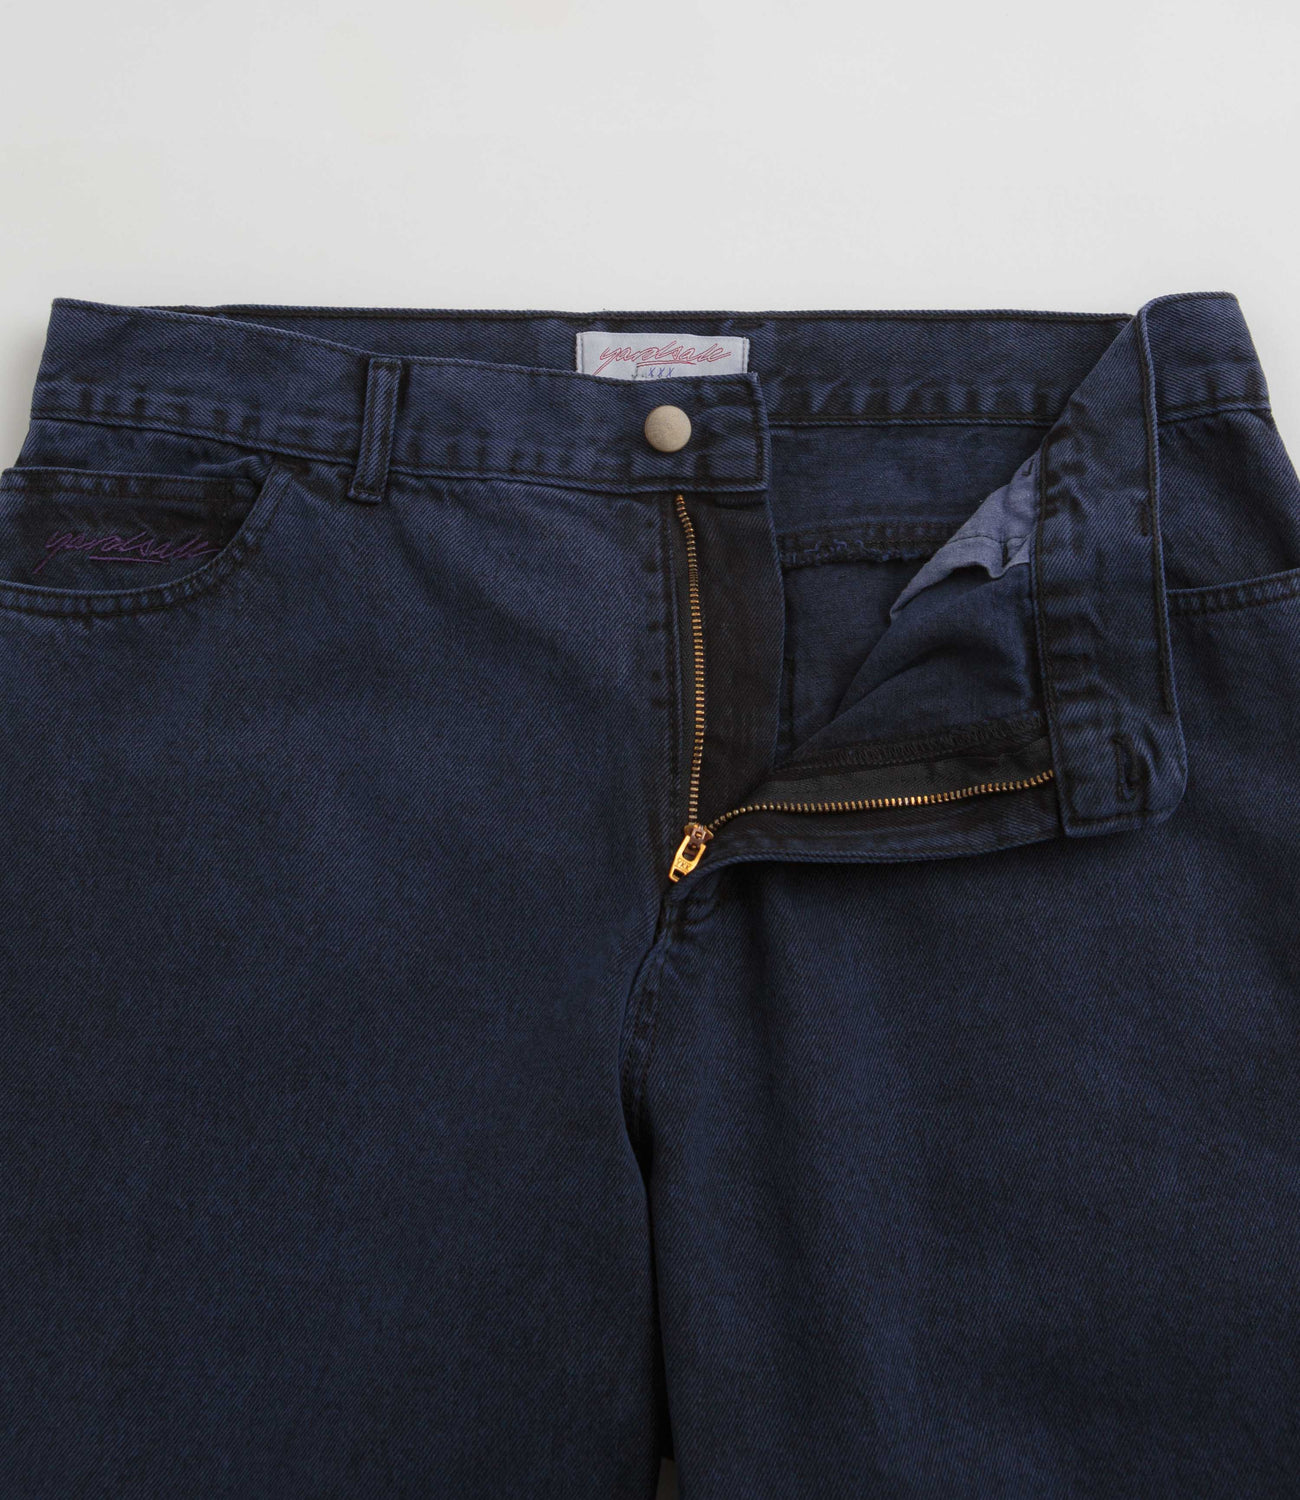 Yardsale Phantasy Jeans - Purple | Flatspot